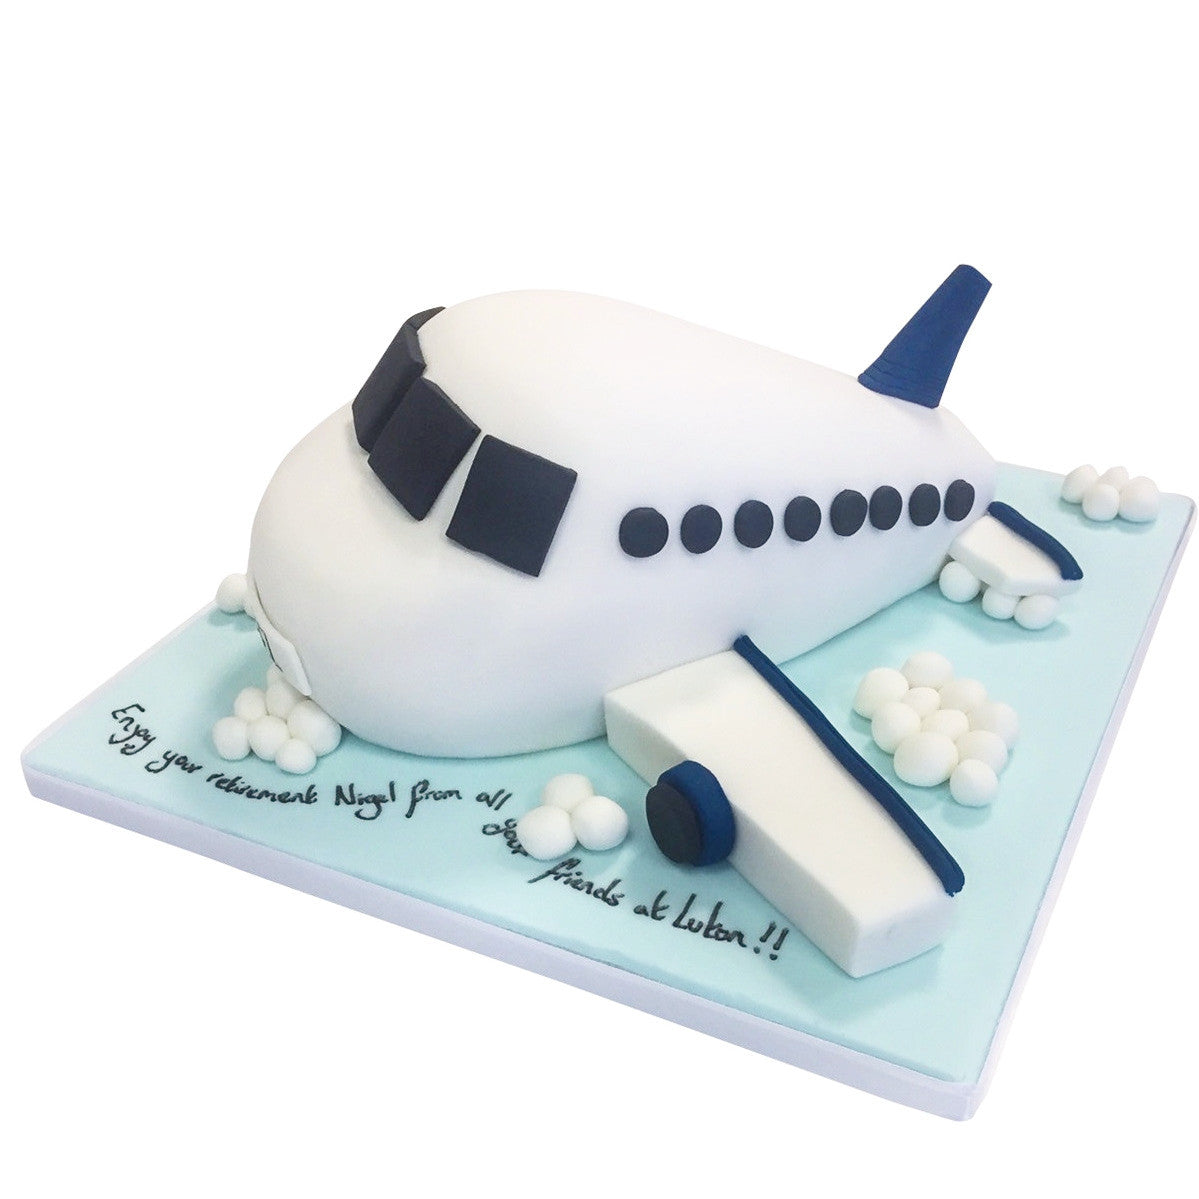 Airplane Cake - Cake for you